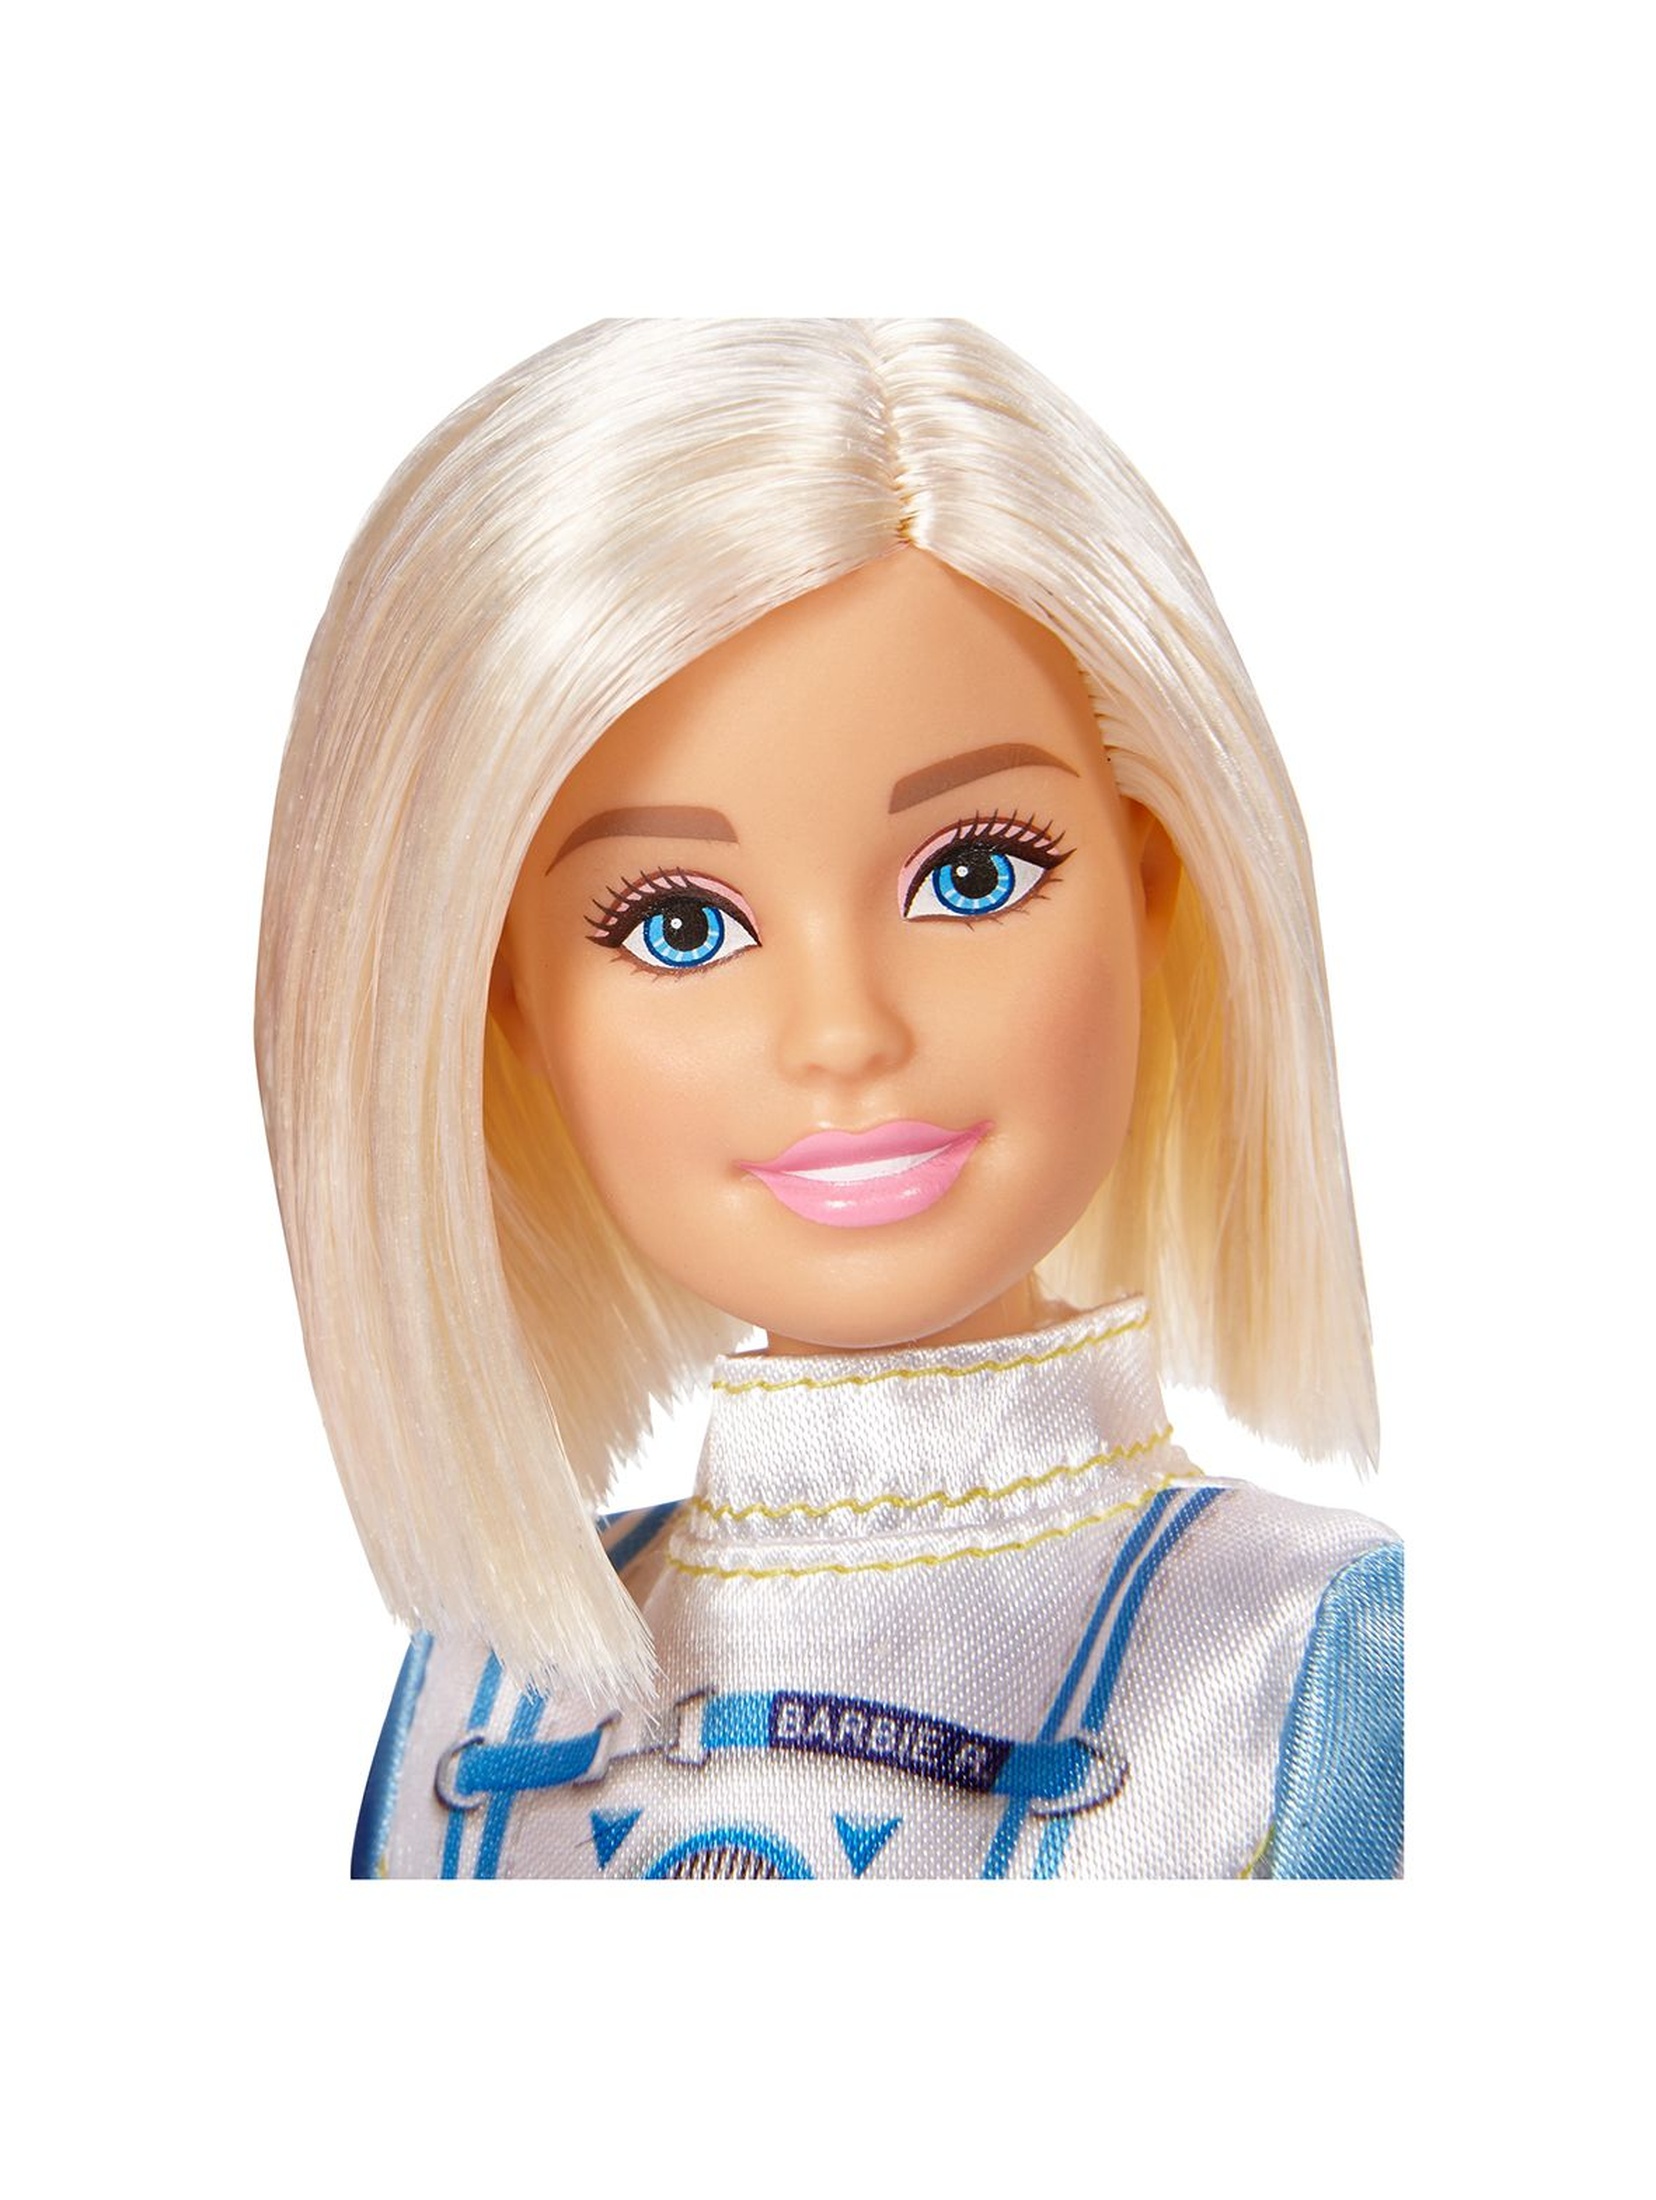 Barbie Kariera Astronautką lalka